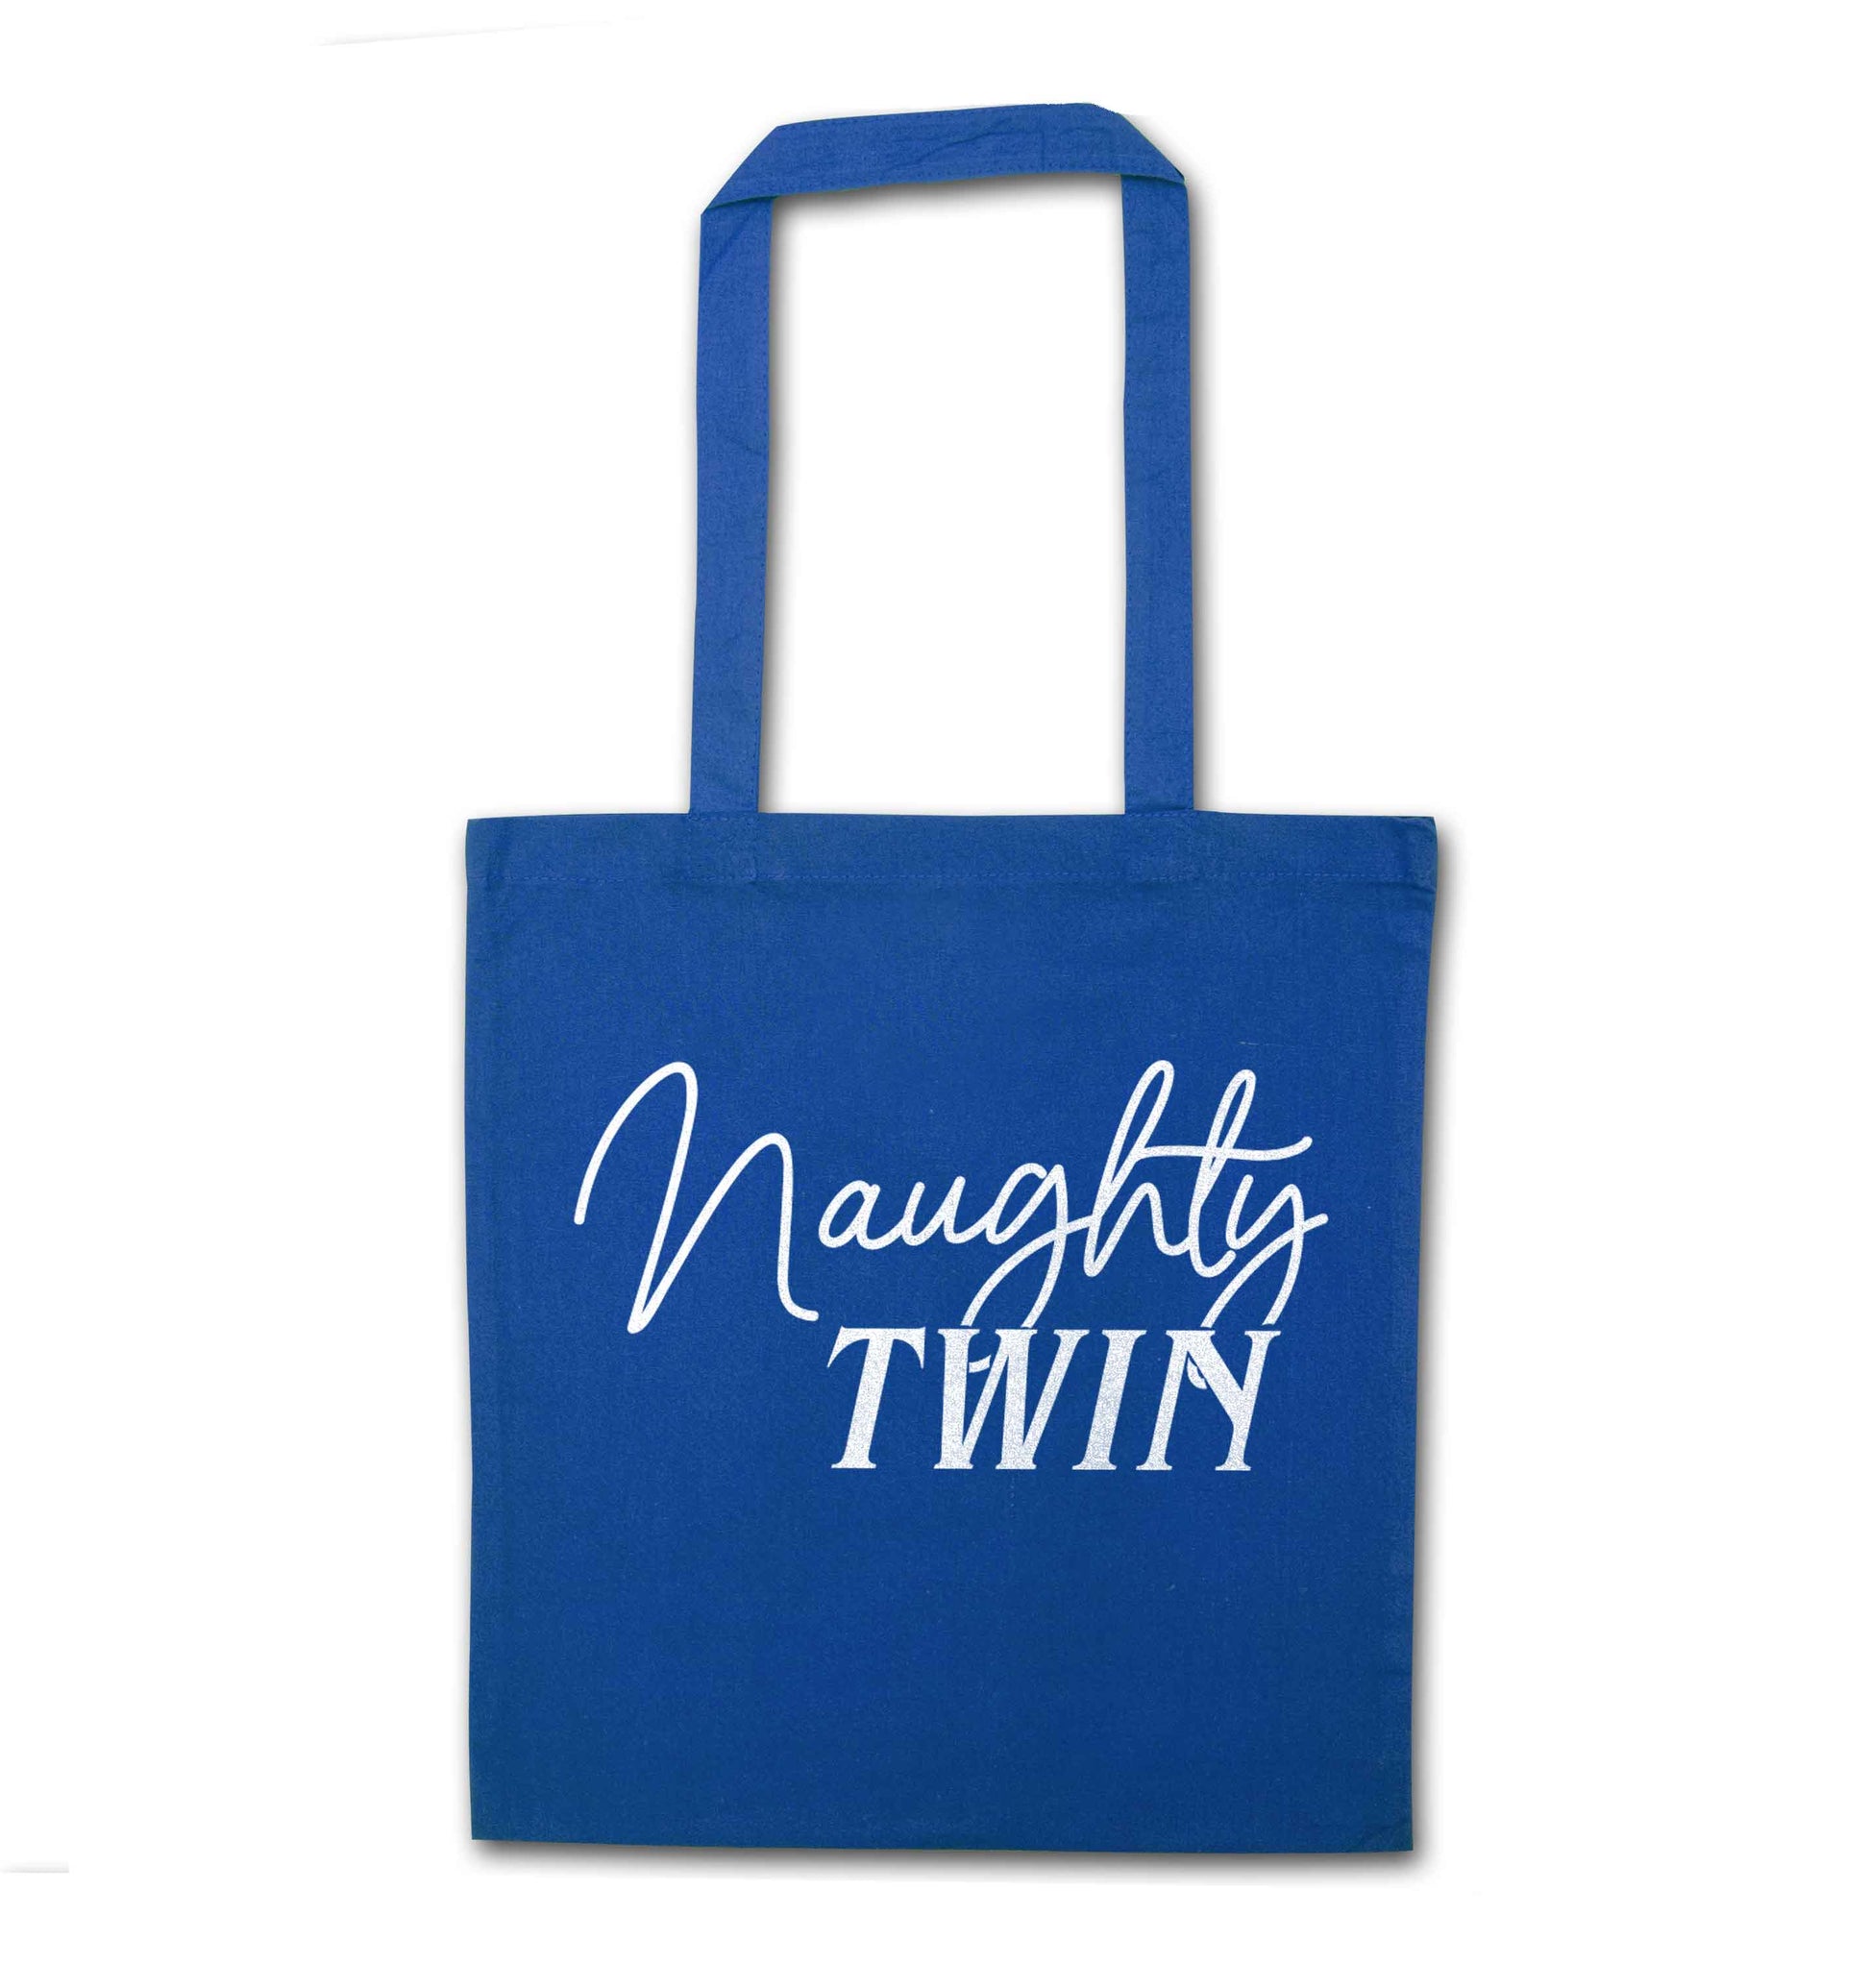 Naughty twin blue tote bag